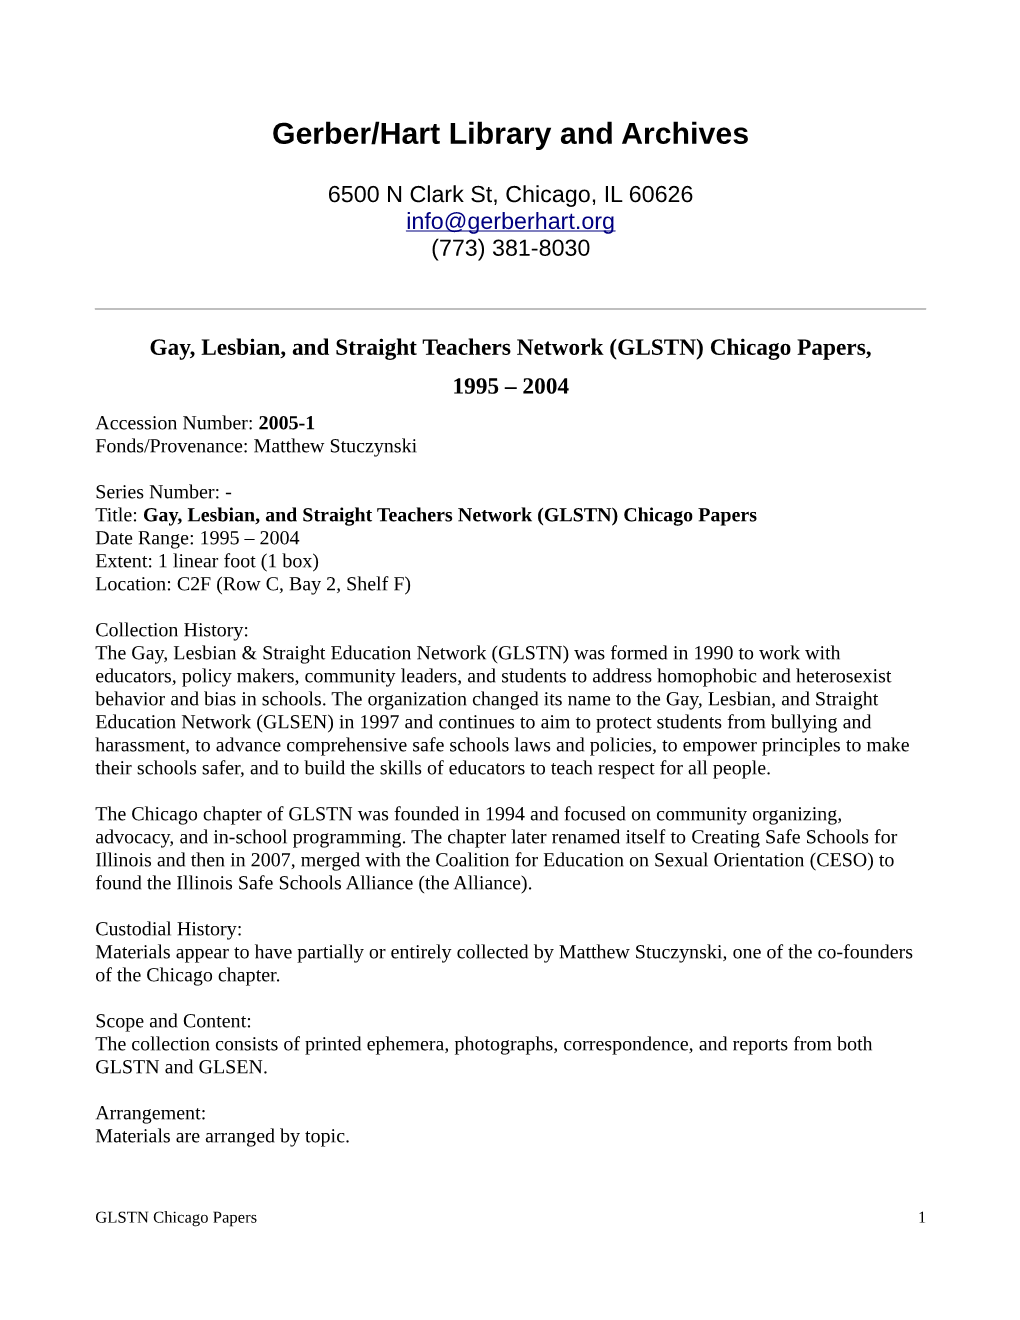 GLSTN) Chicago Papers, 1995 – 2004 Accession Number: 2005-1 Fonds/Provenance: Matthew Stuczynski